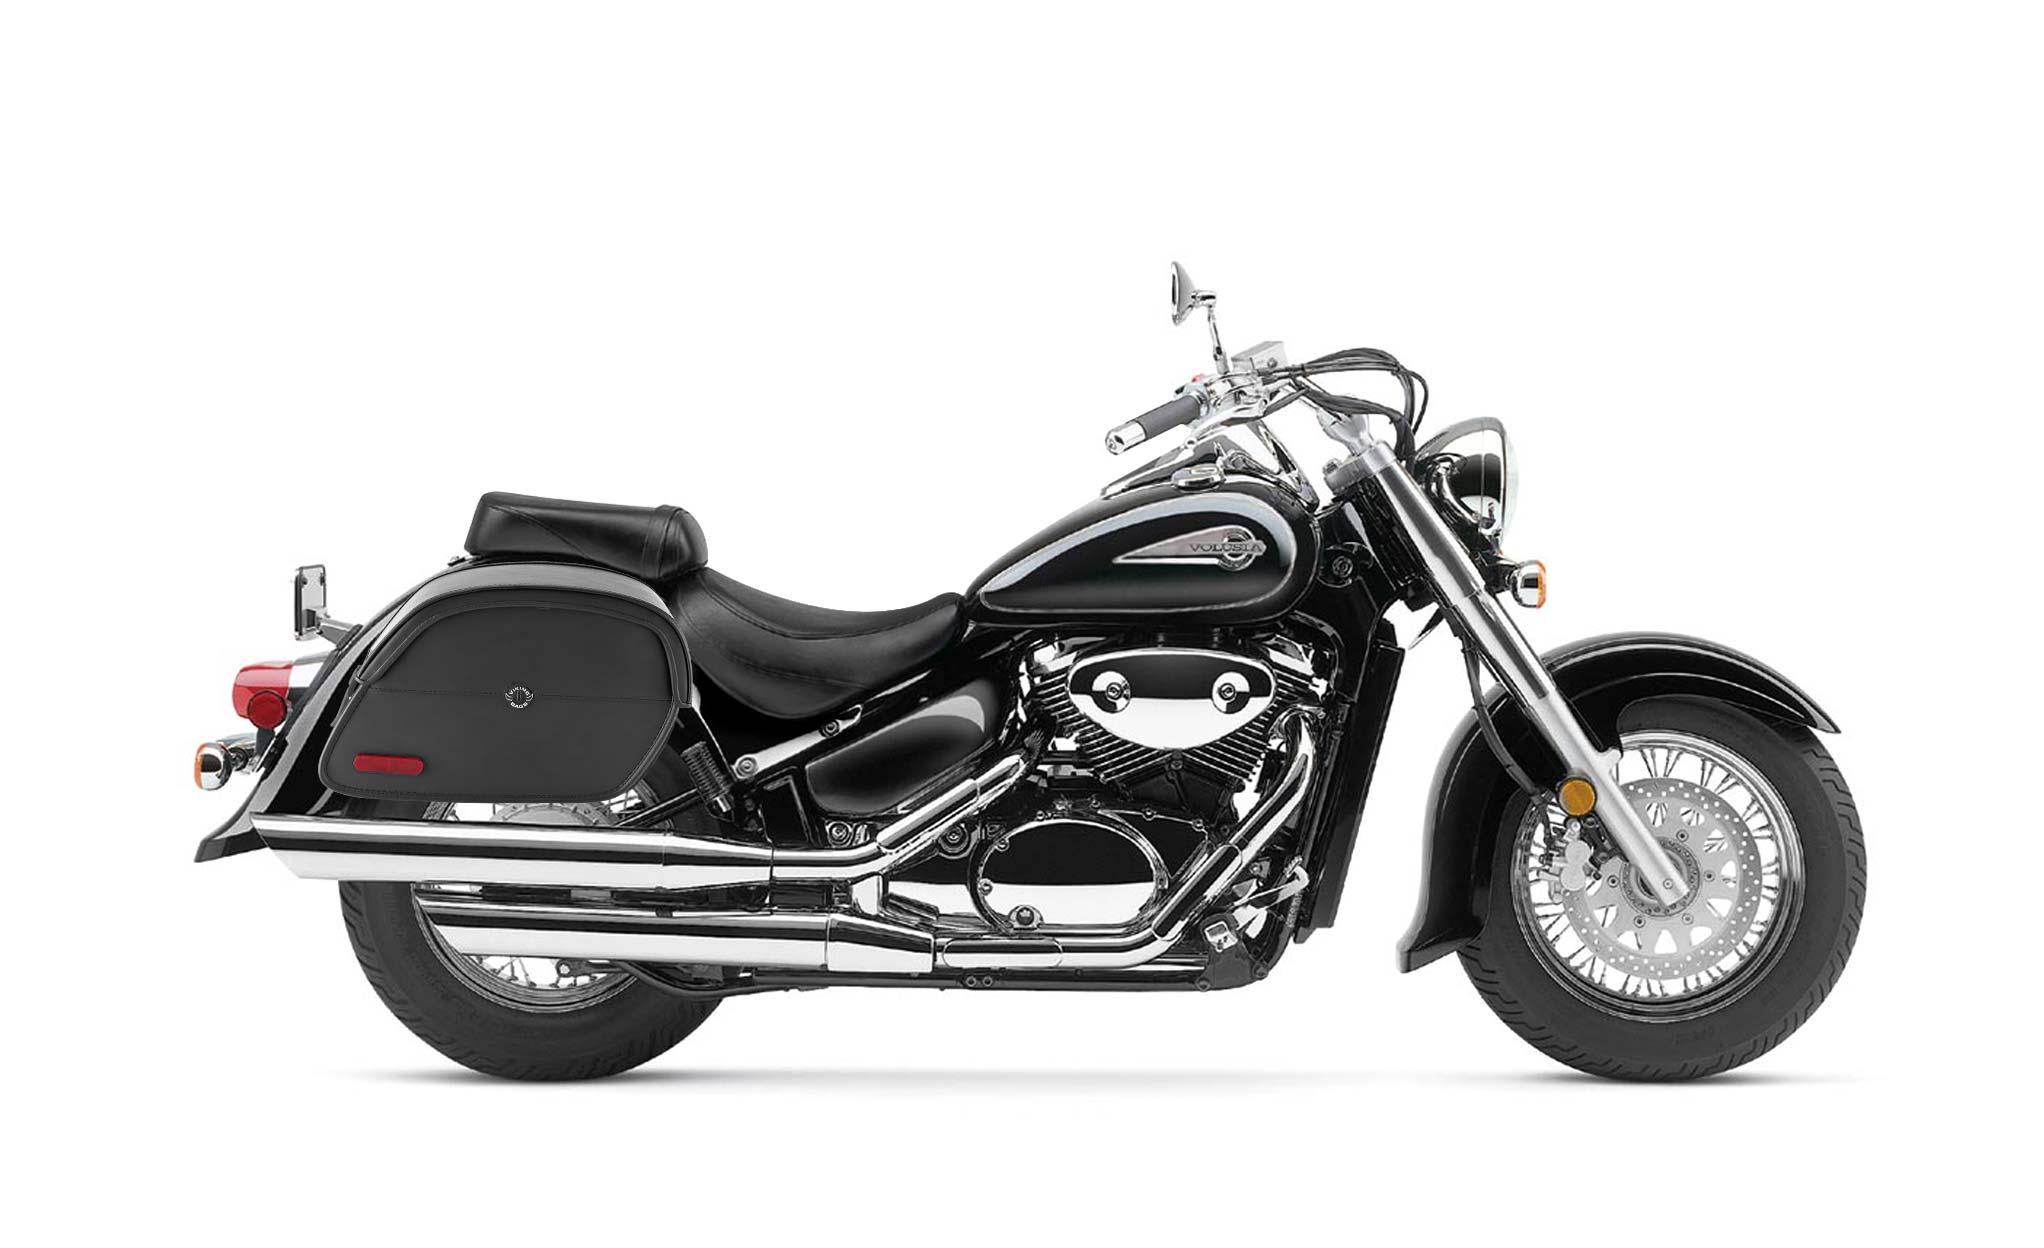 Viking California Large Suzuki Volusia 800 Leather Motorcycle Saddlebags on Bike Photo @expand